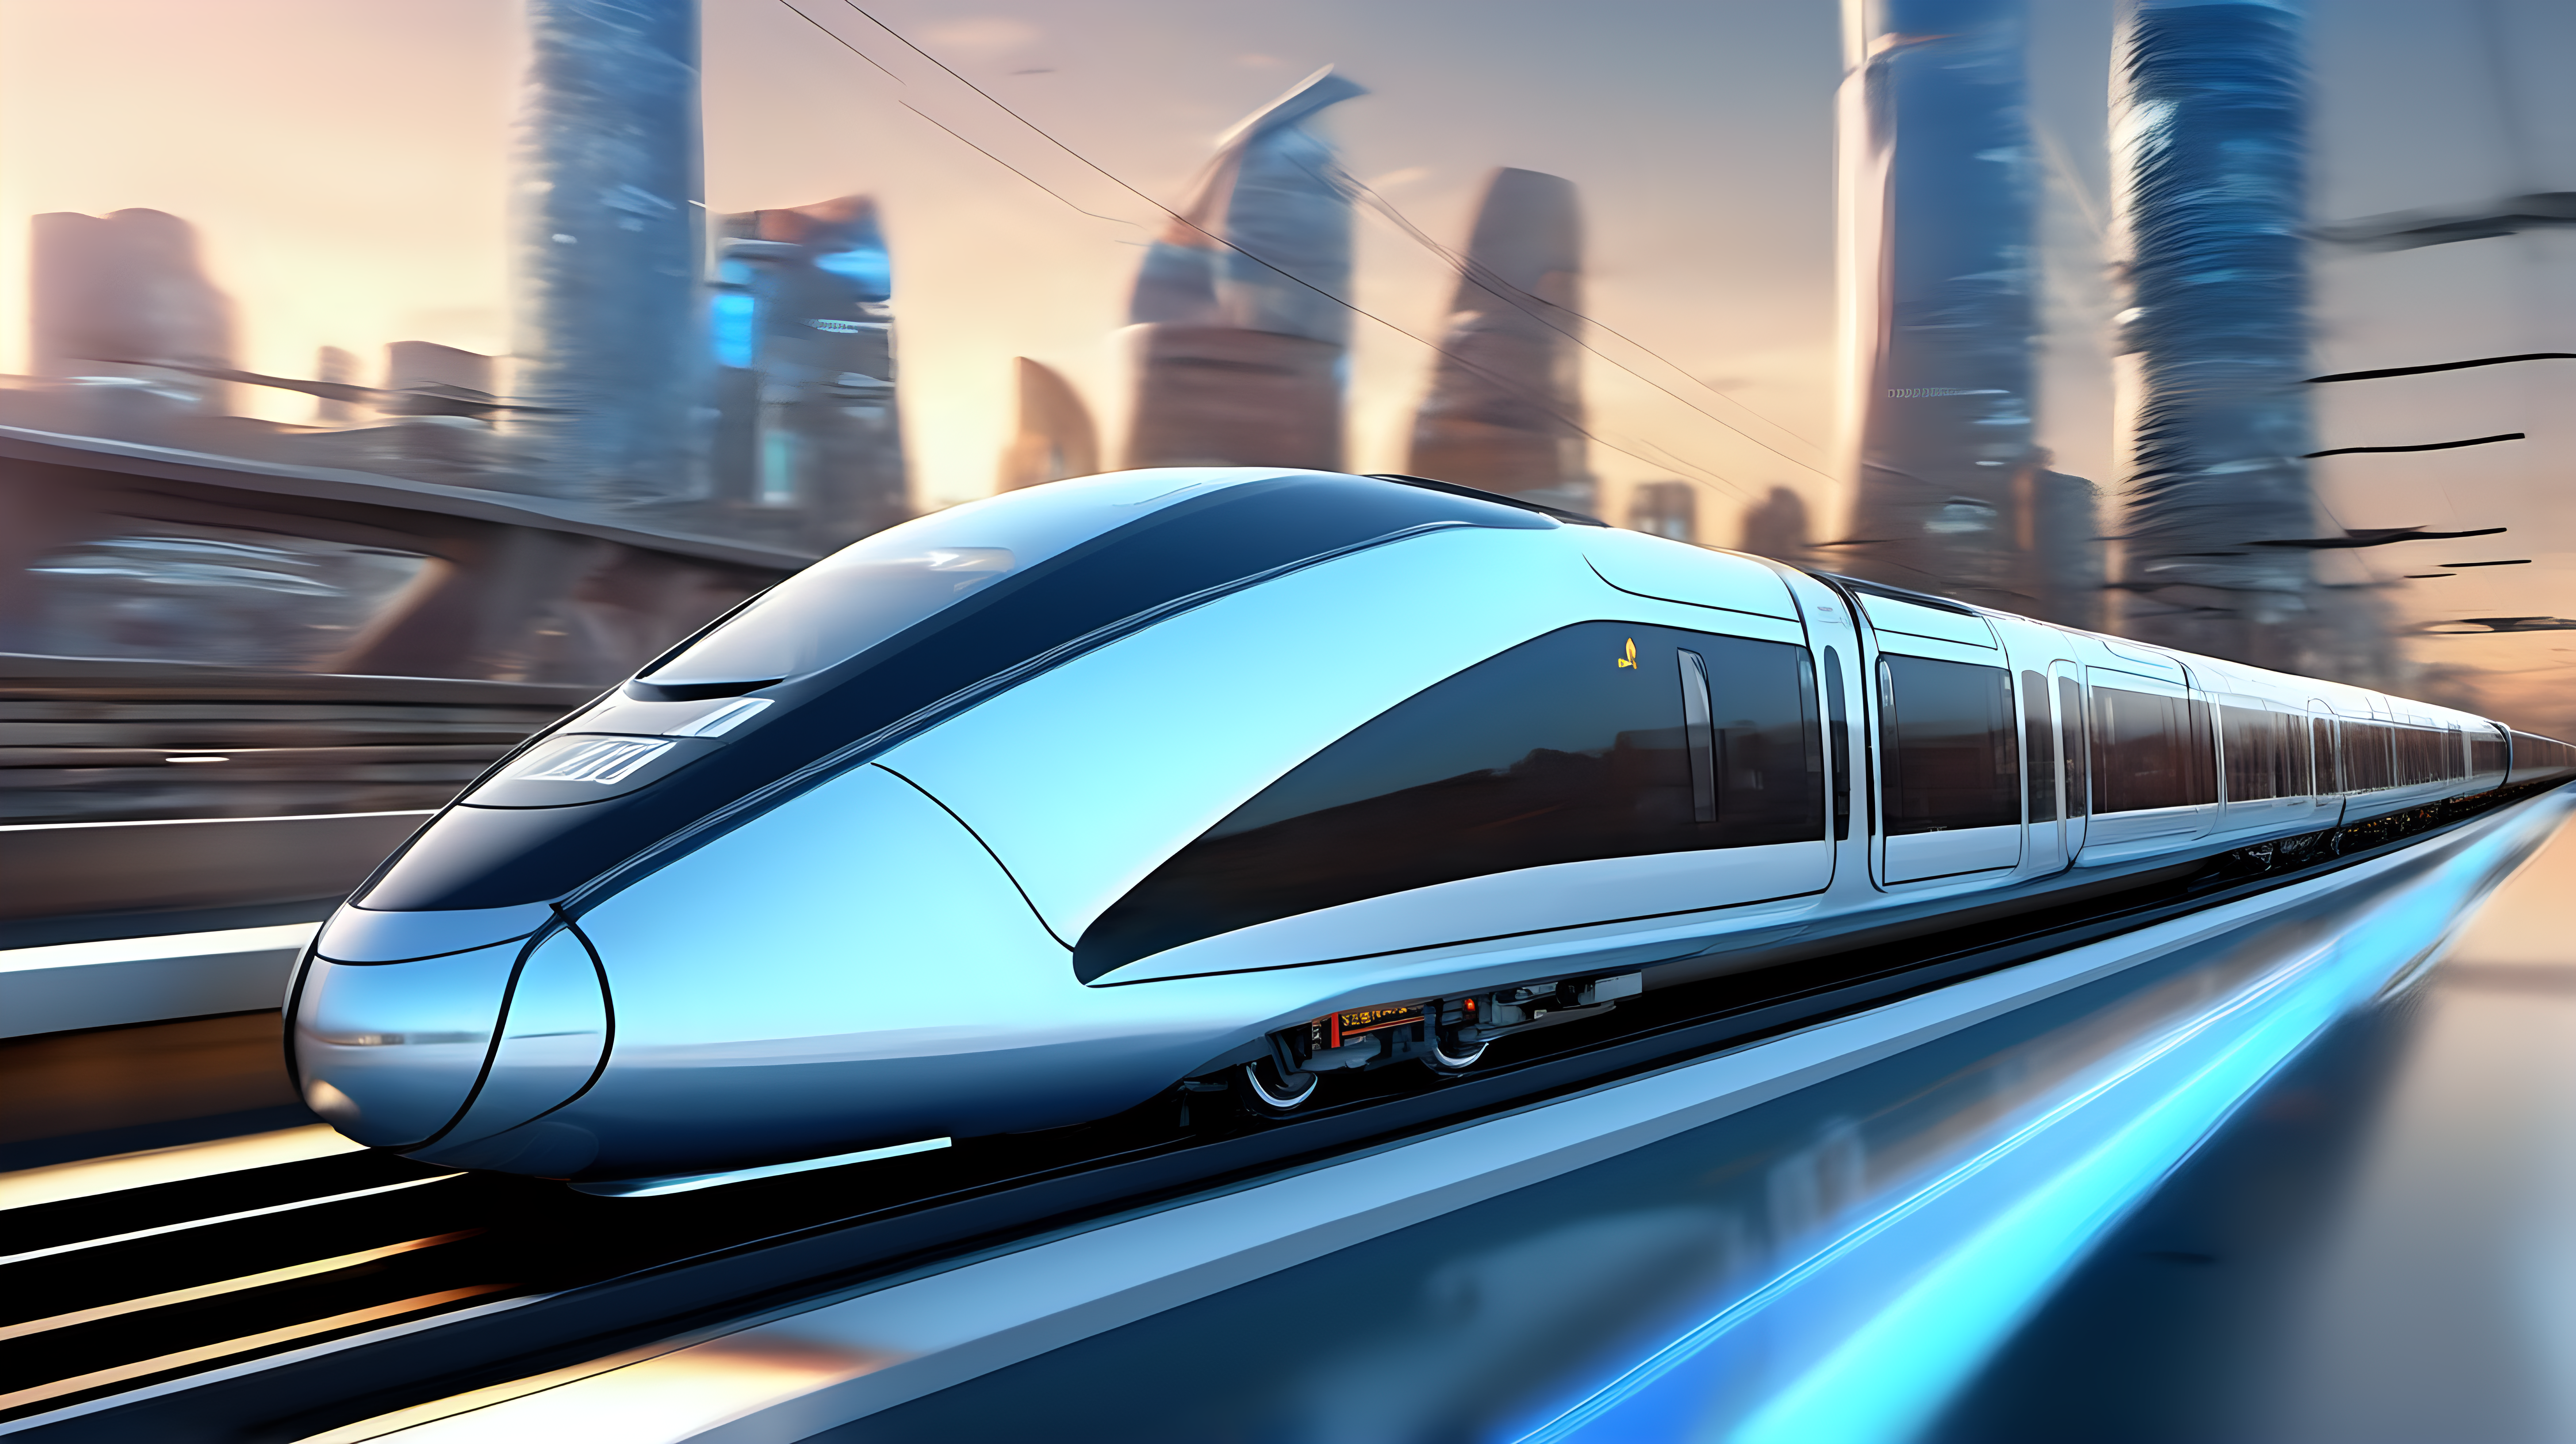 An artistically rendered futuristic train speeding along a